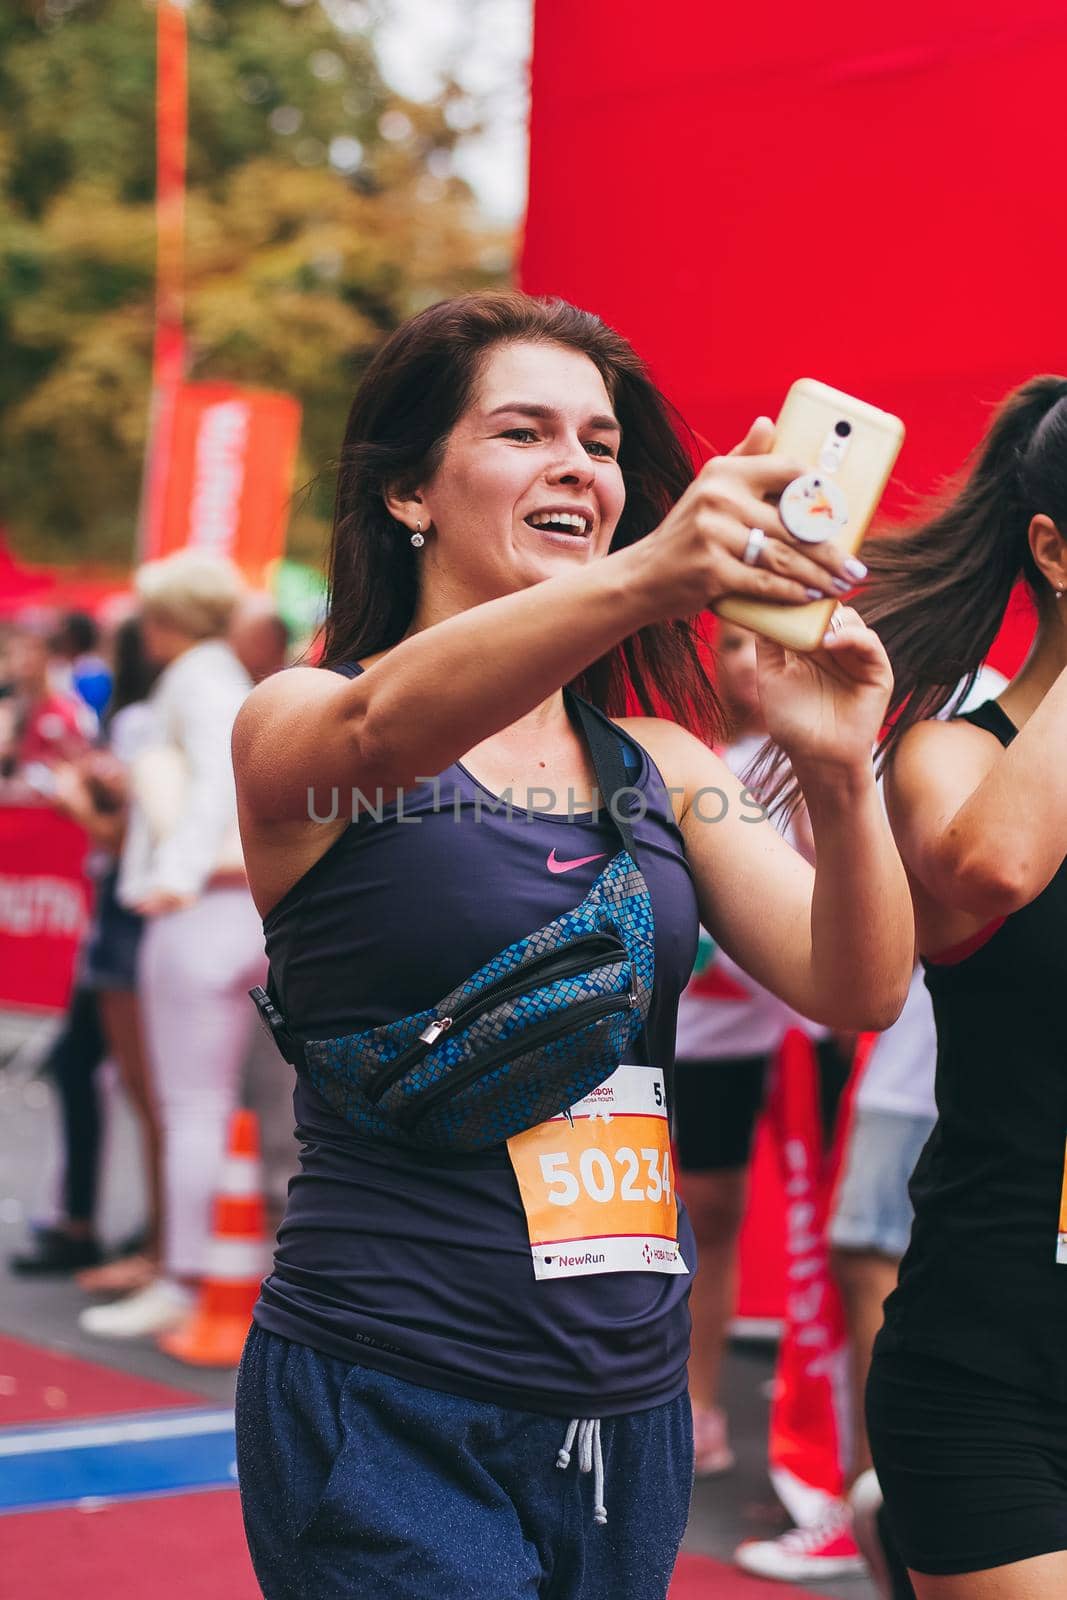 POLTAVA, UKRAINE - 1 SEPTEMBER 2019: A young woman reaches finish line and making selfie during Nova Poshta Poltava Half Marathon by mmp1206